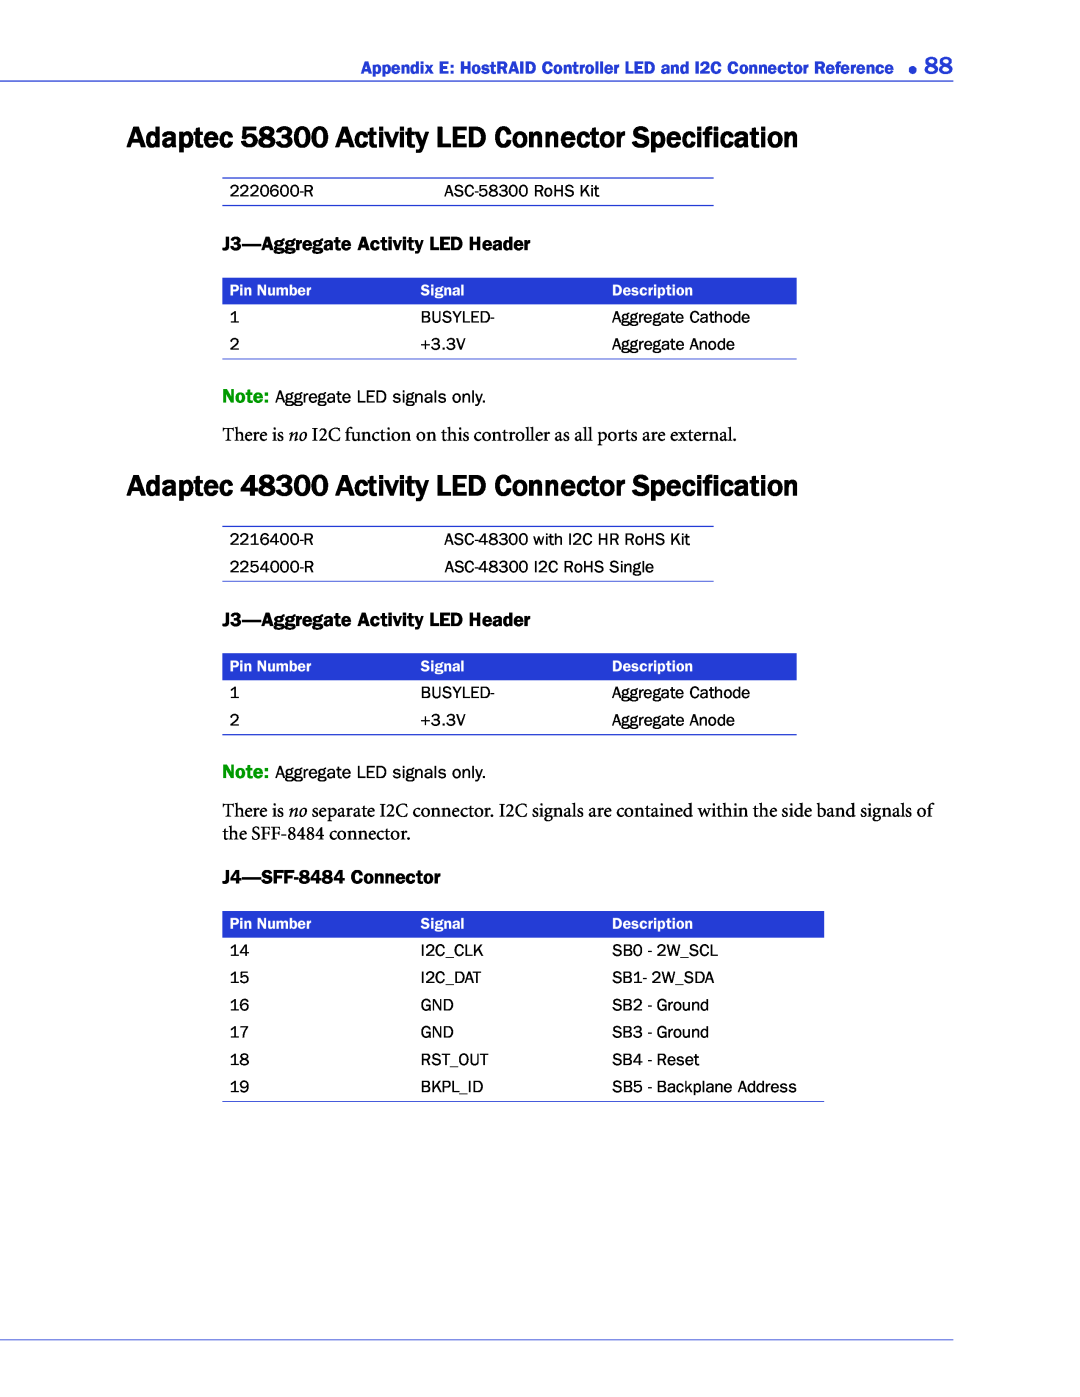 Adaptec 1220SA Adaptec 58300 Activity LED Connector Specification, Adaptec 48300 Activity LED Connector Specification 